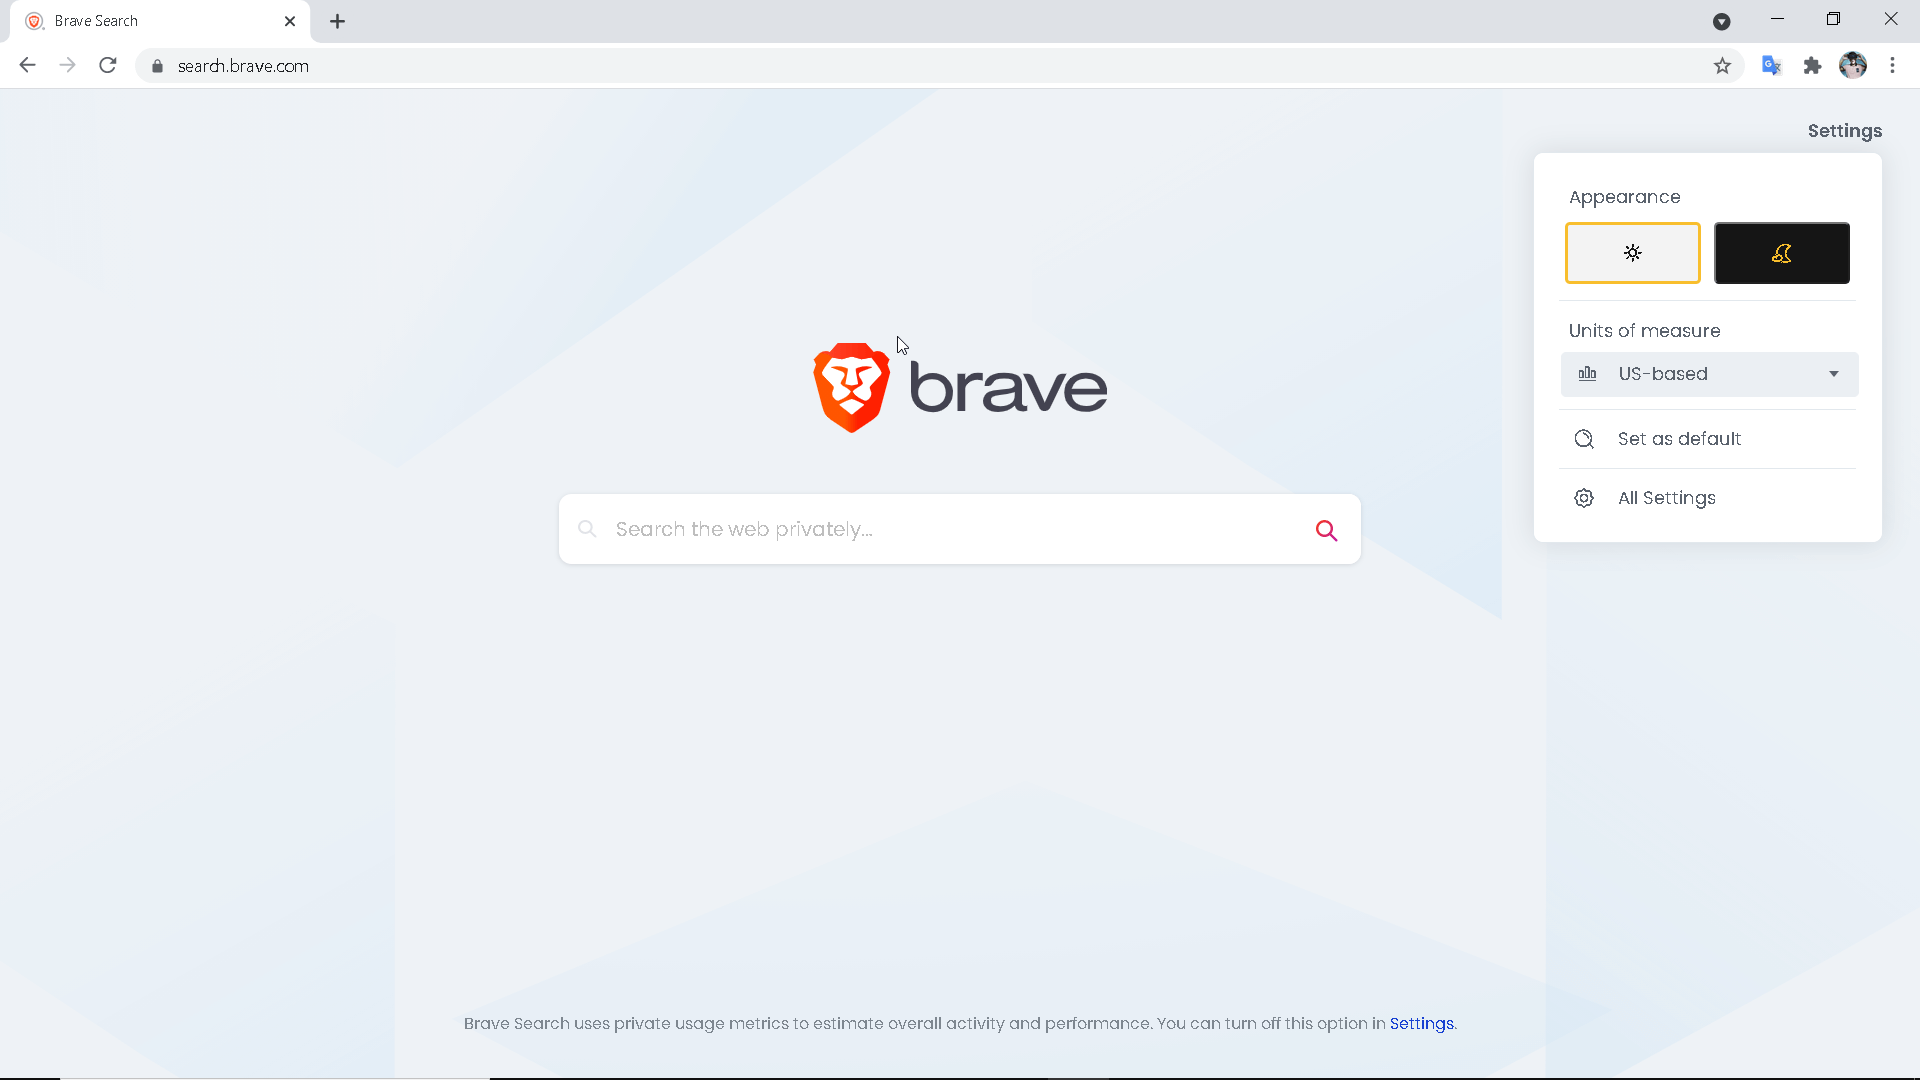 Brave Search Engine Appearance - TechneSiyam